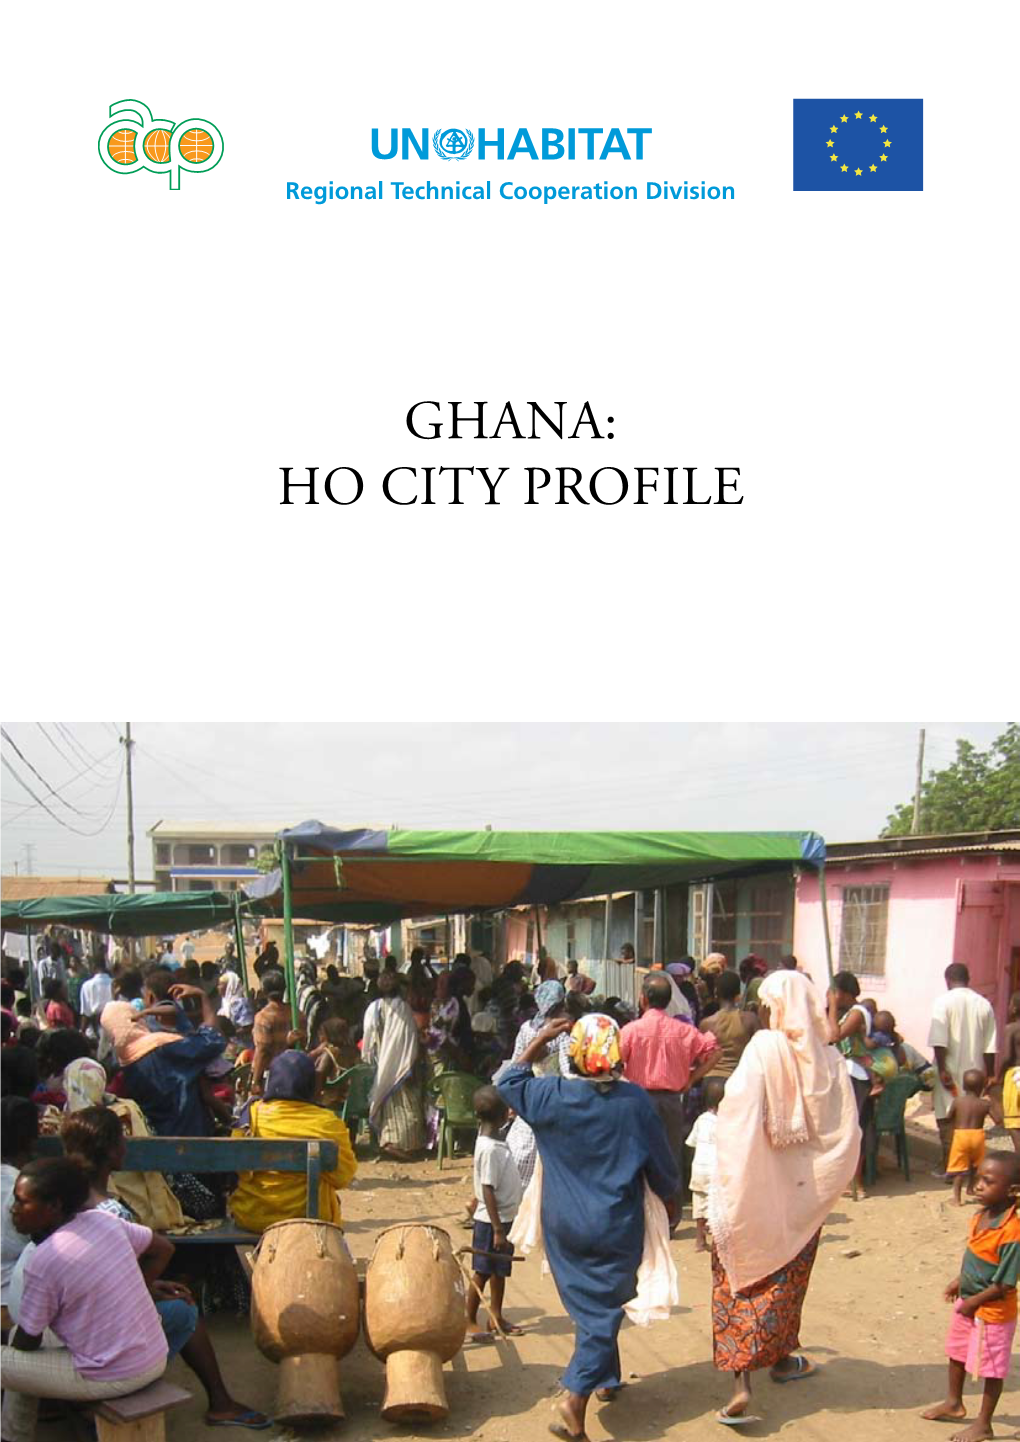 GHANA: Ho CITY PROFILE